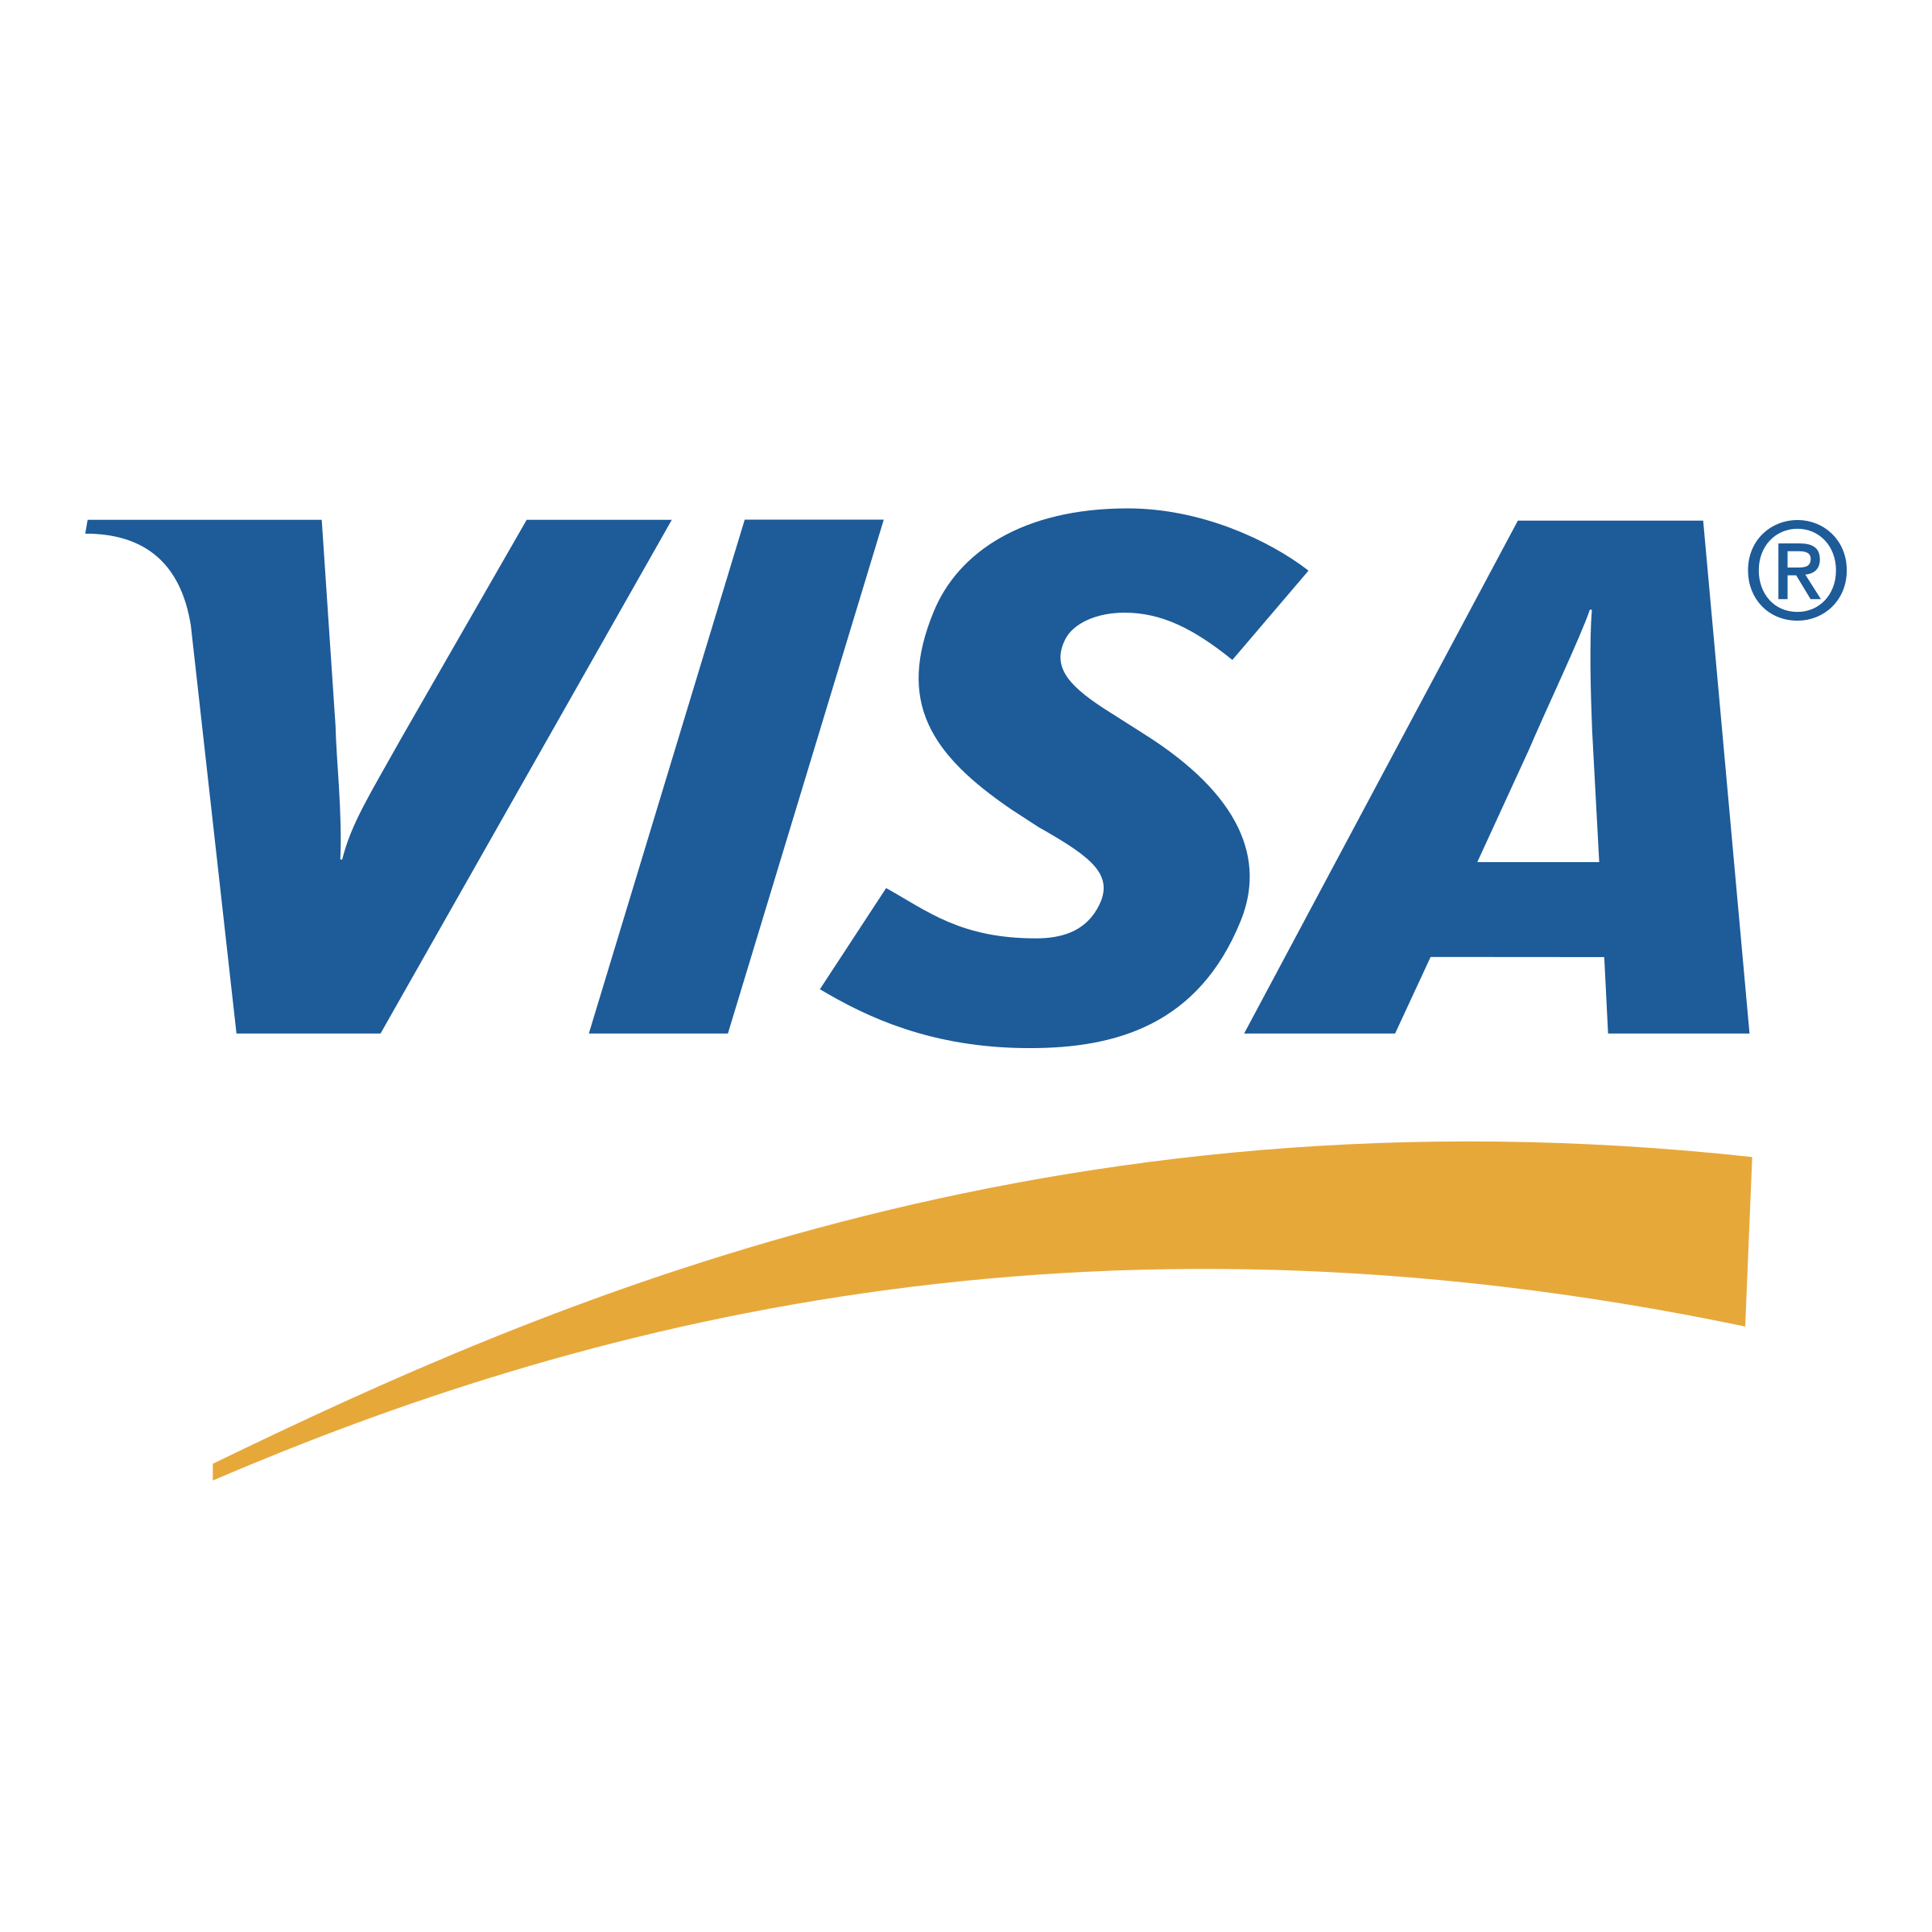 Visa Logo Png Transparent & Svg Vector - Pluspng Pluspng, Visa Logo PNG - Free PNG